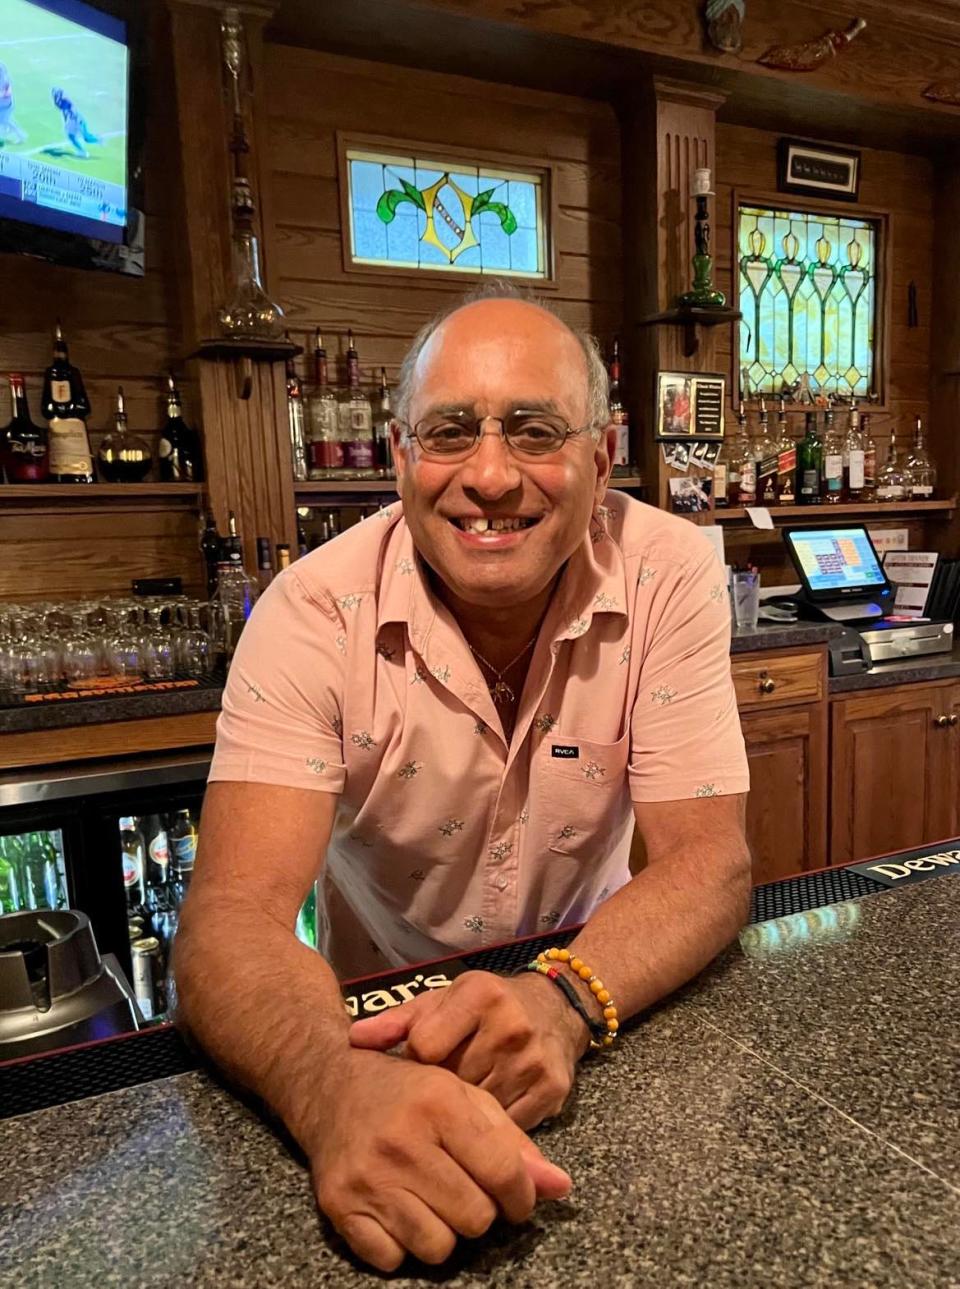 Mark Shaheen owns the Desert Inn restaurant in Canton with his wife, Tina. Mark's late father, John, started the Desert Inn decades ago.